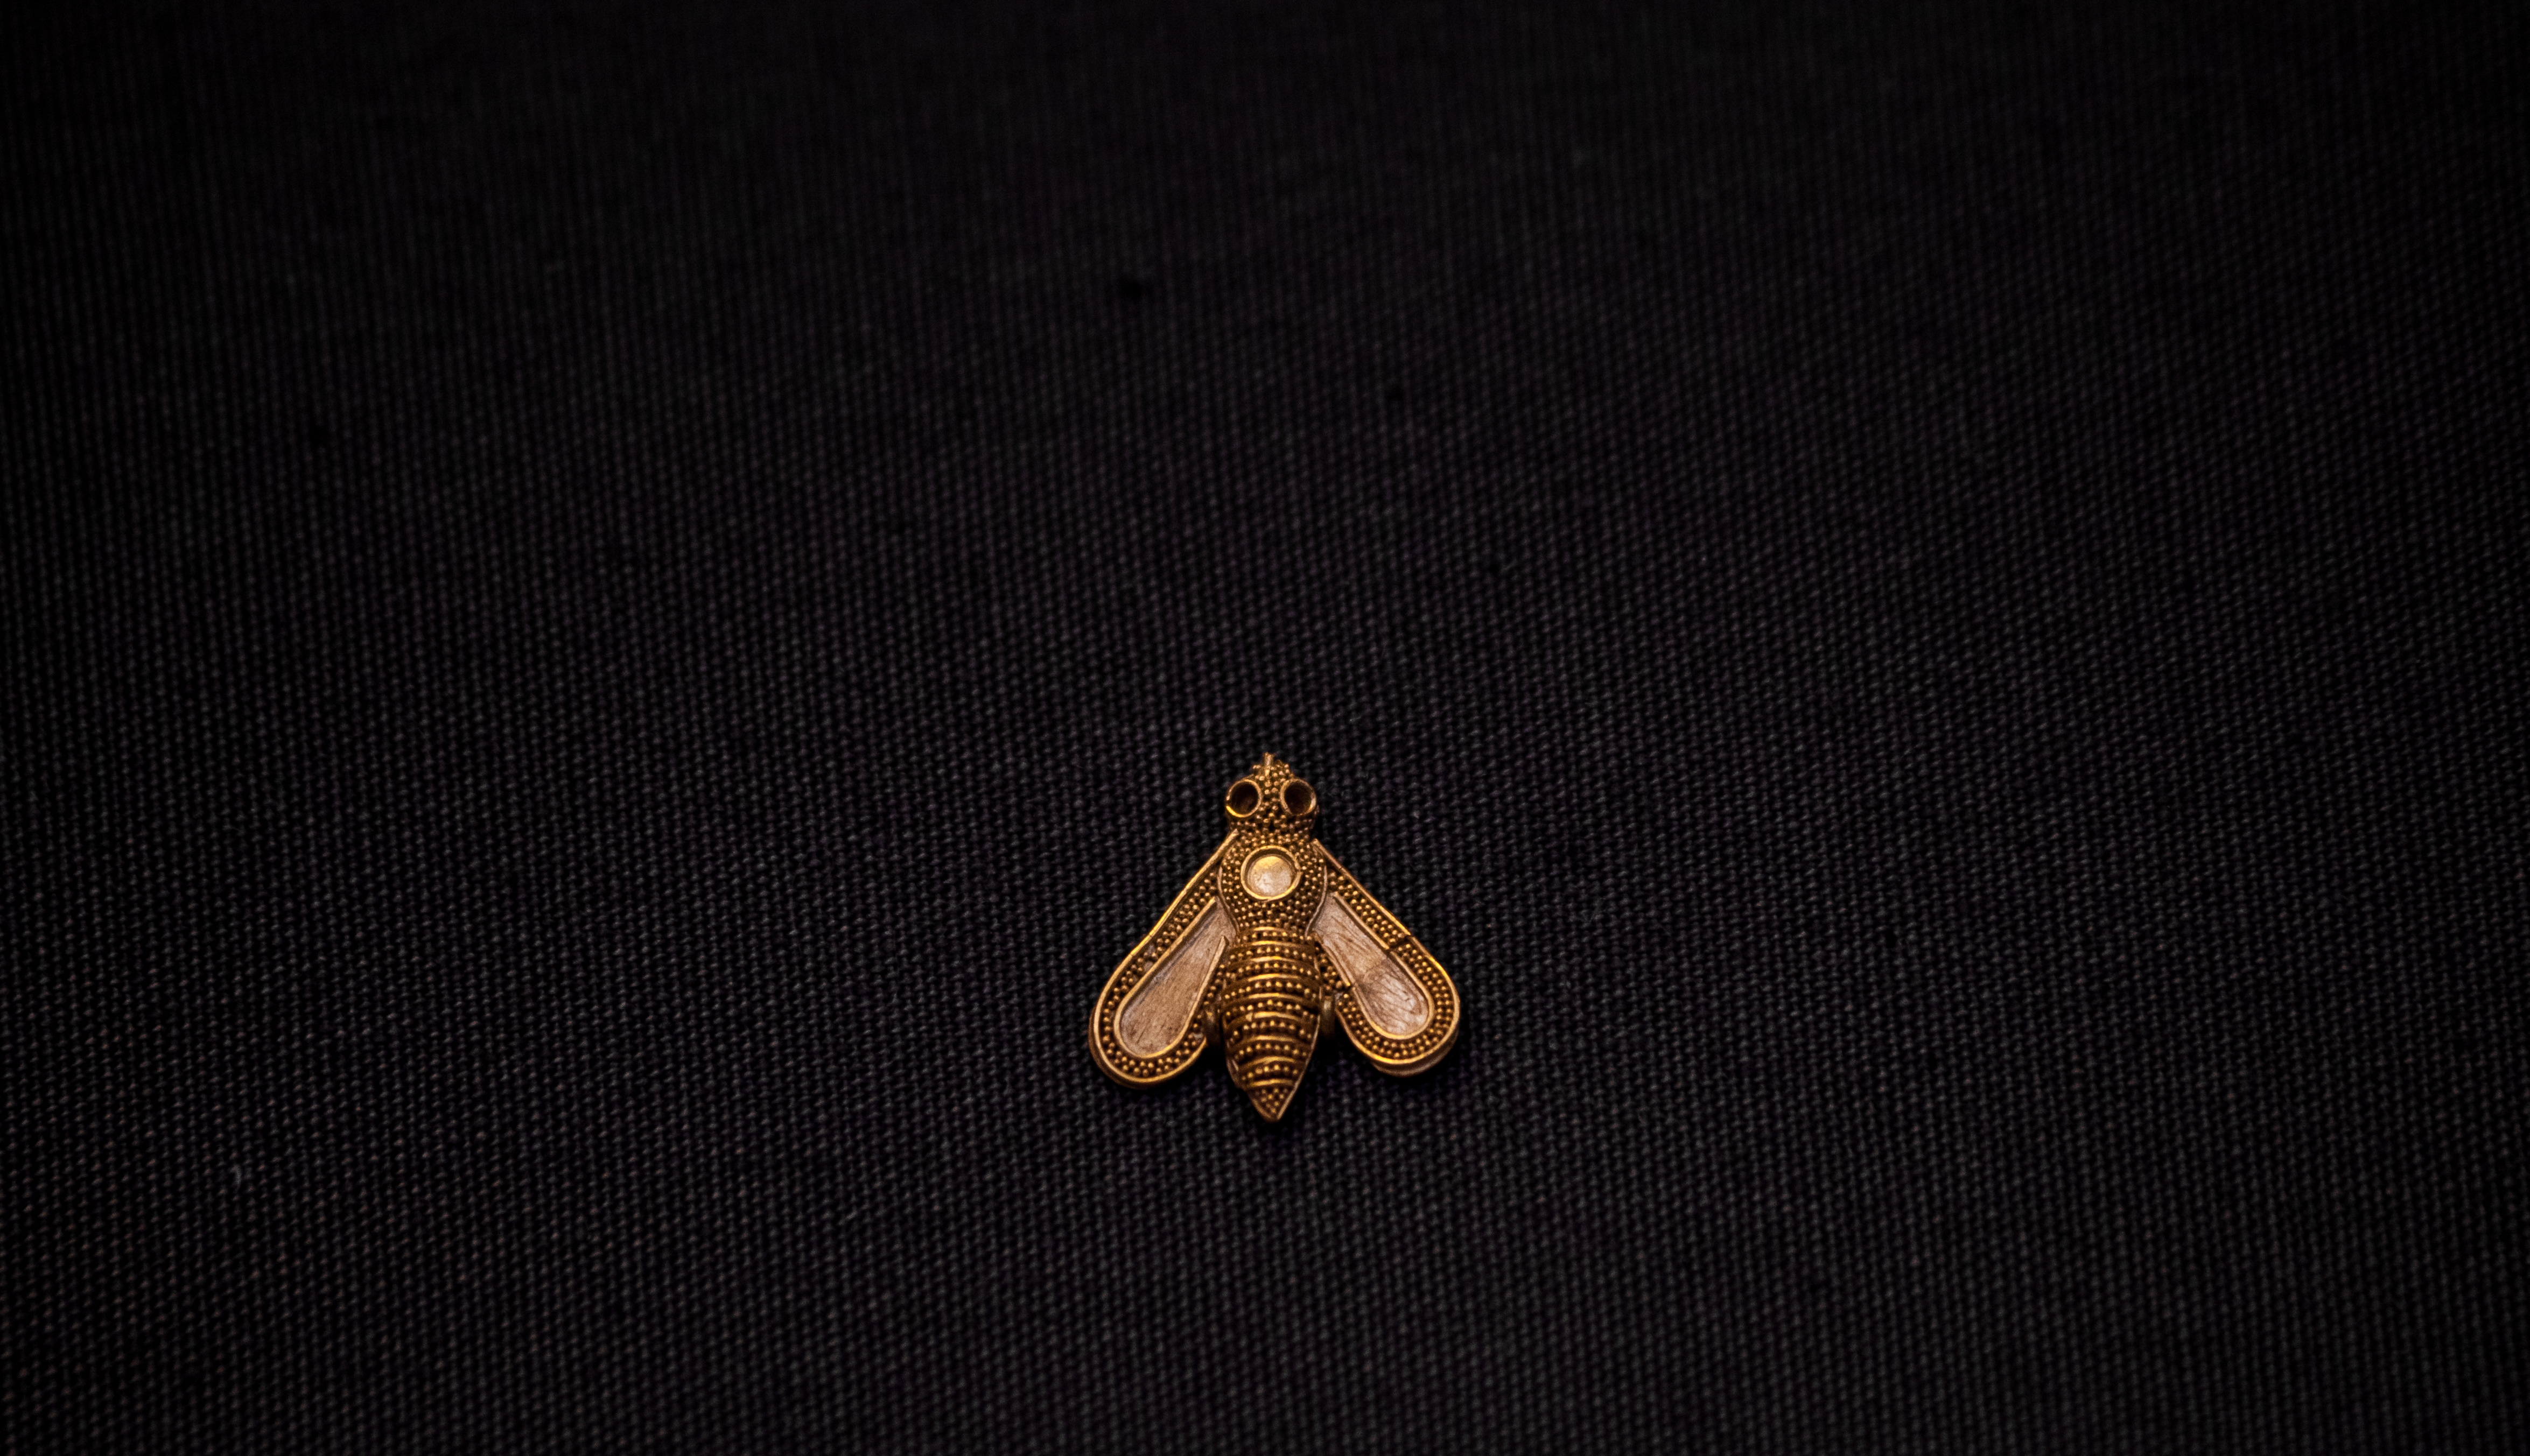 Bee sheet gold ornament, British Museum, London, GB IMG 6443 edit